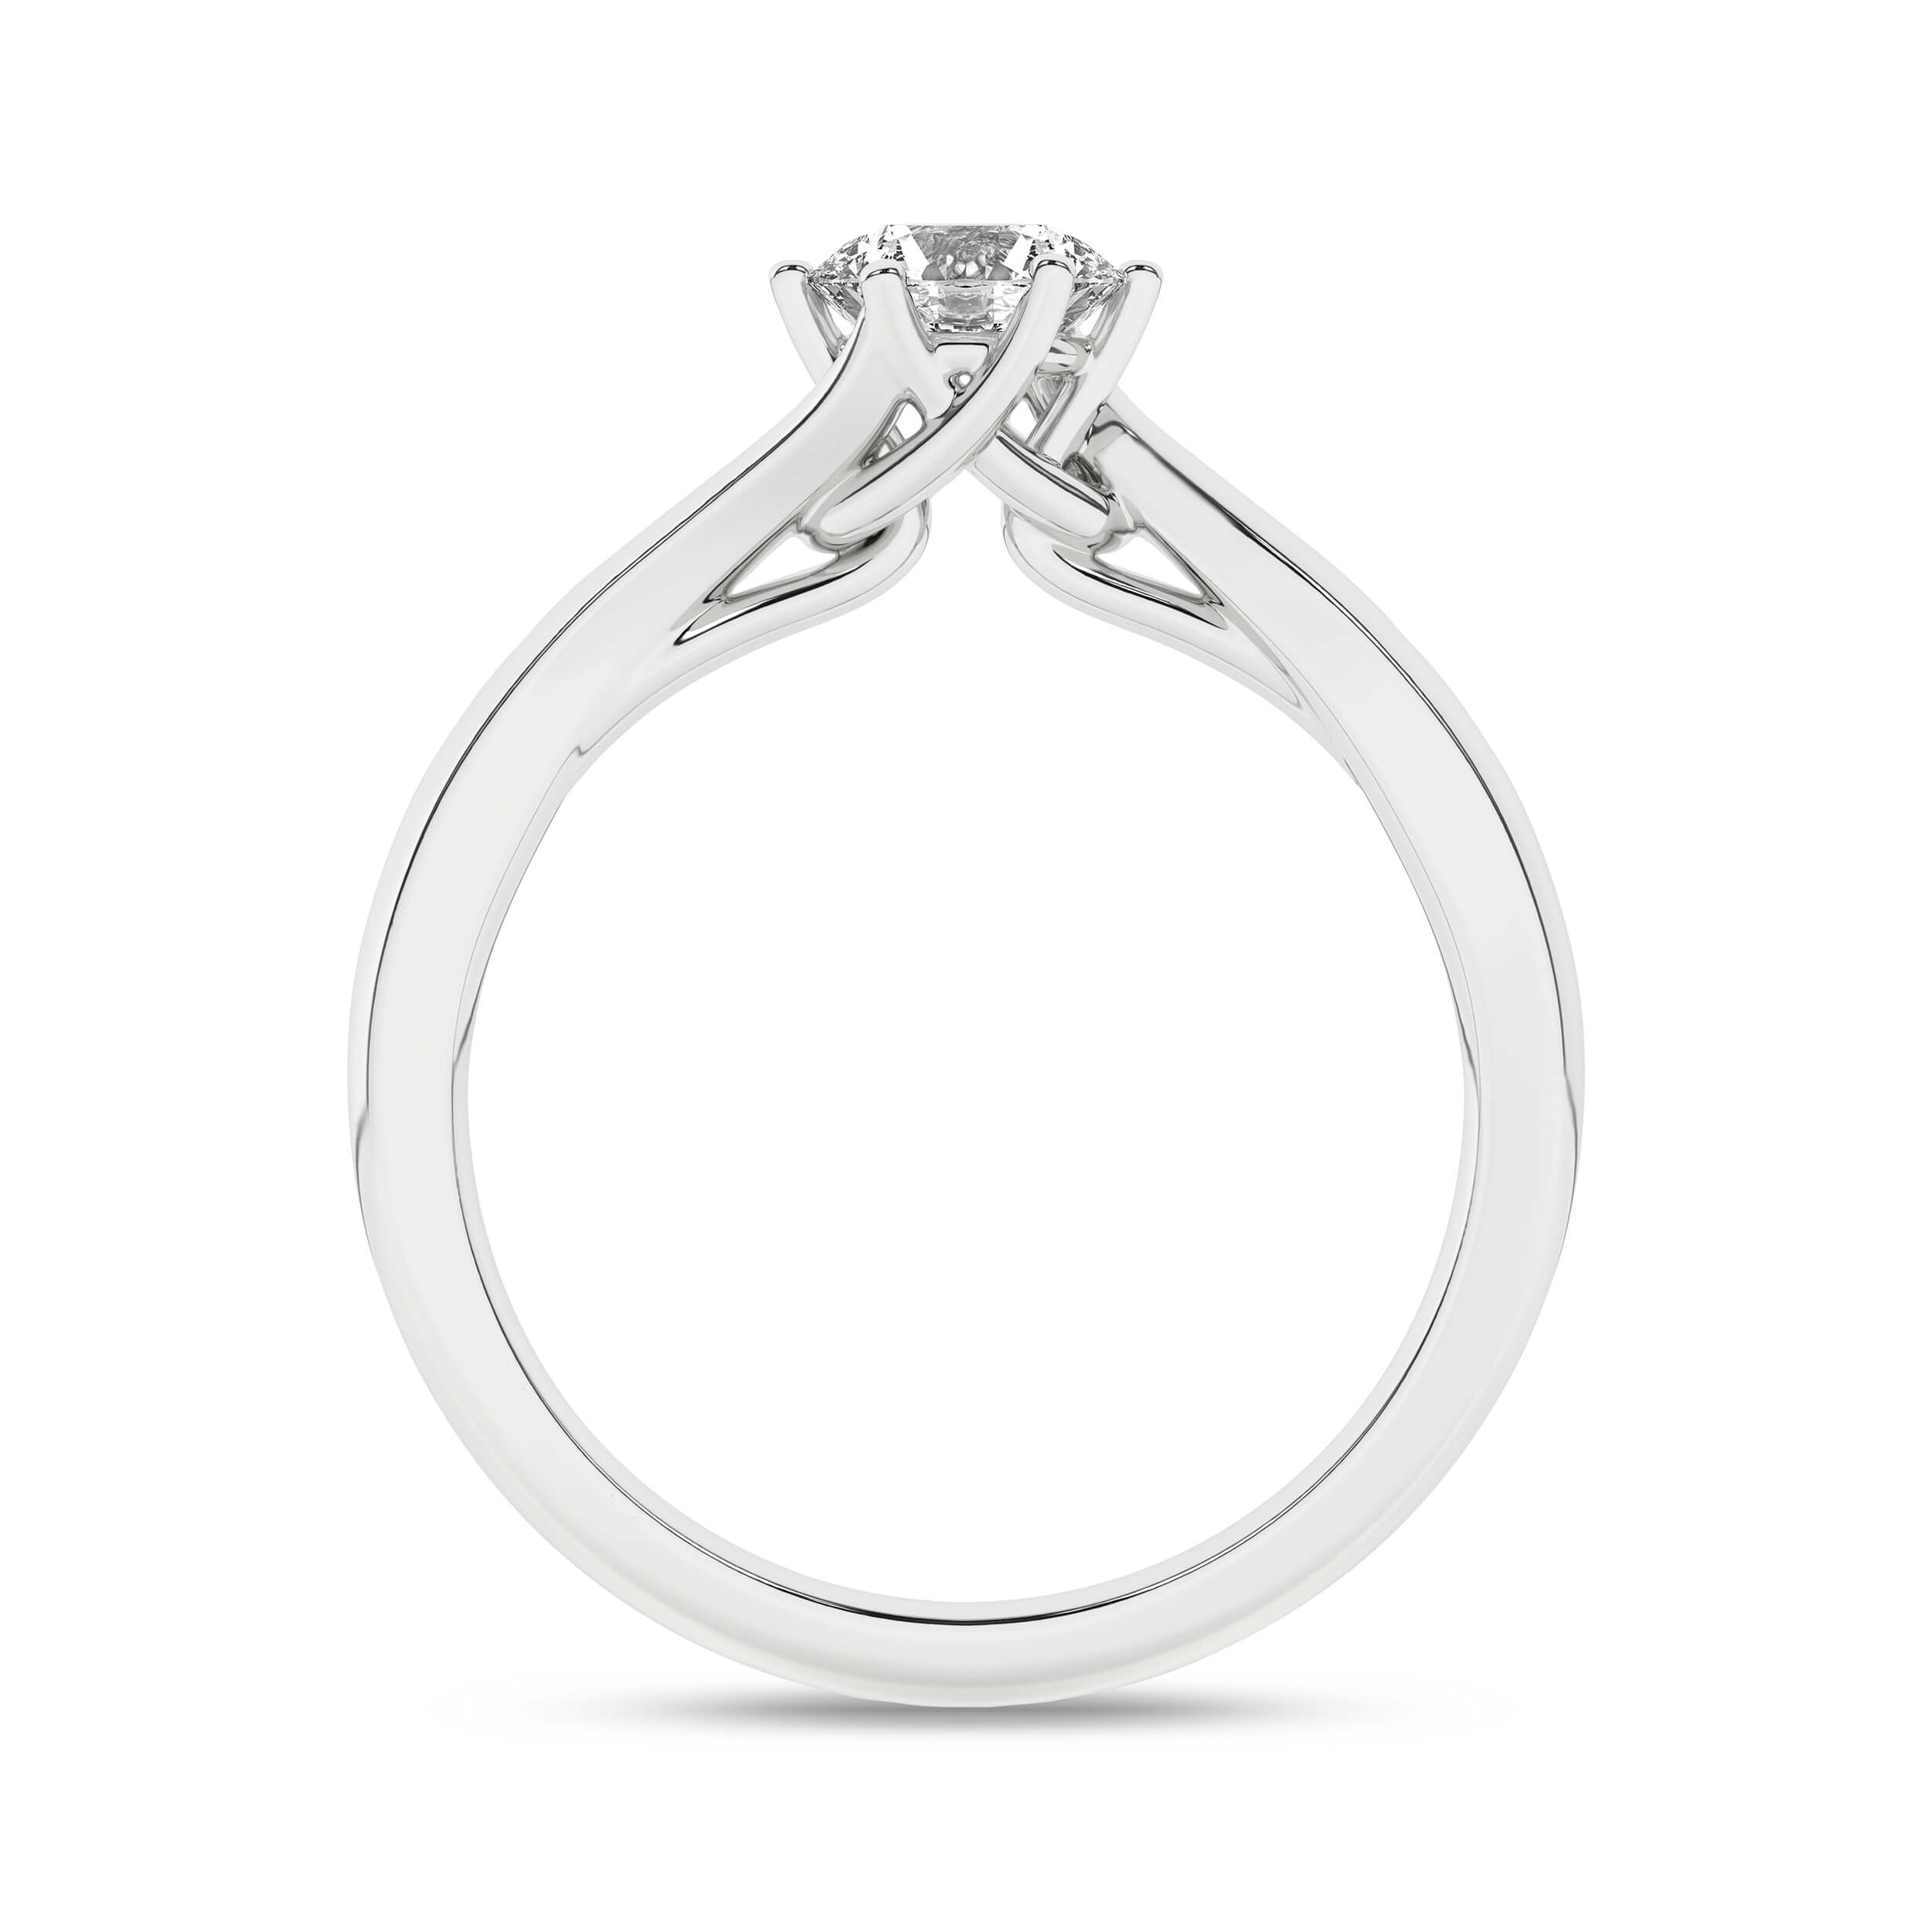 Inel de logodna din Aur Alb 18K cu Diamant 0.5Ct, articol RS0471, previzualizare foto 3